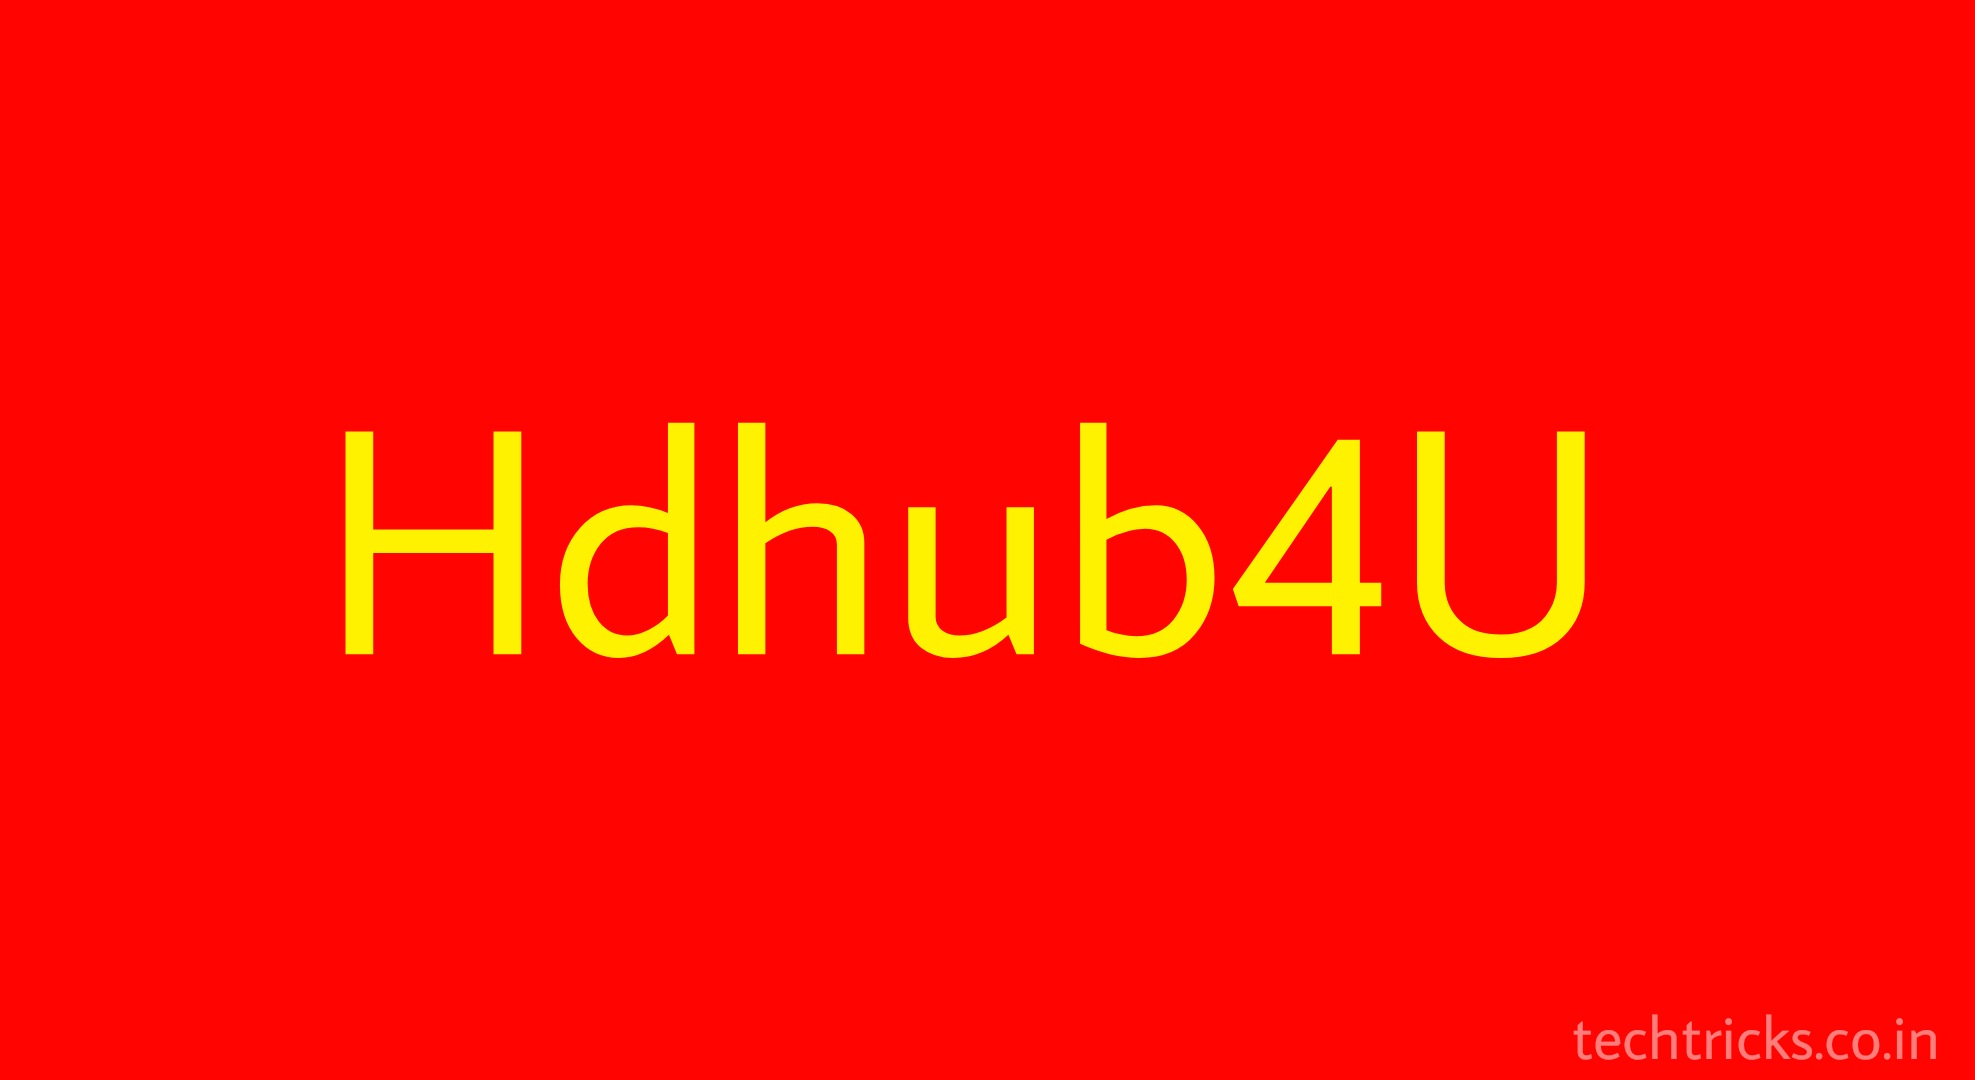 Hdhub4u Telegram Channel, Hdhub4u,